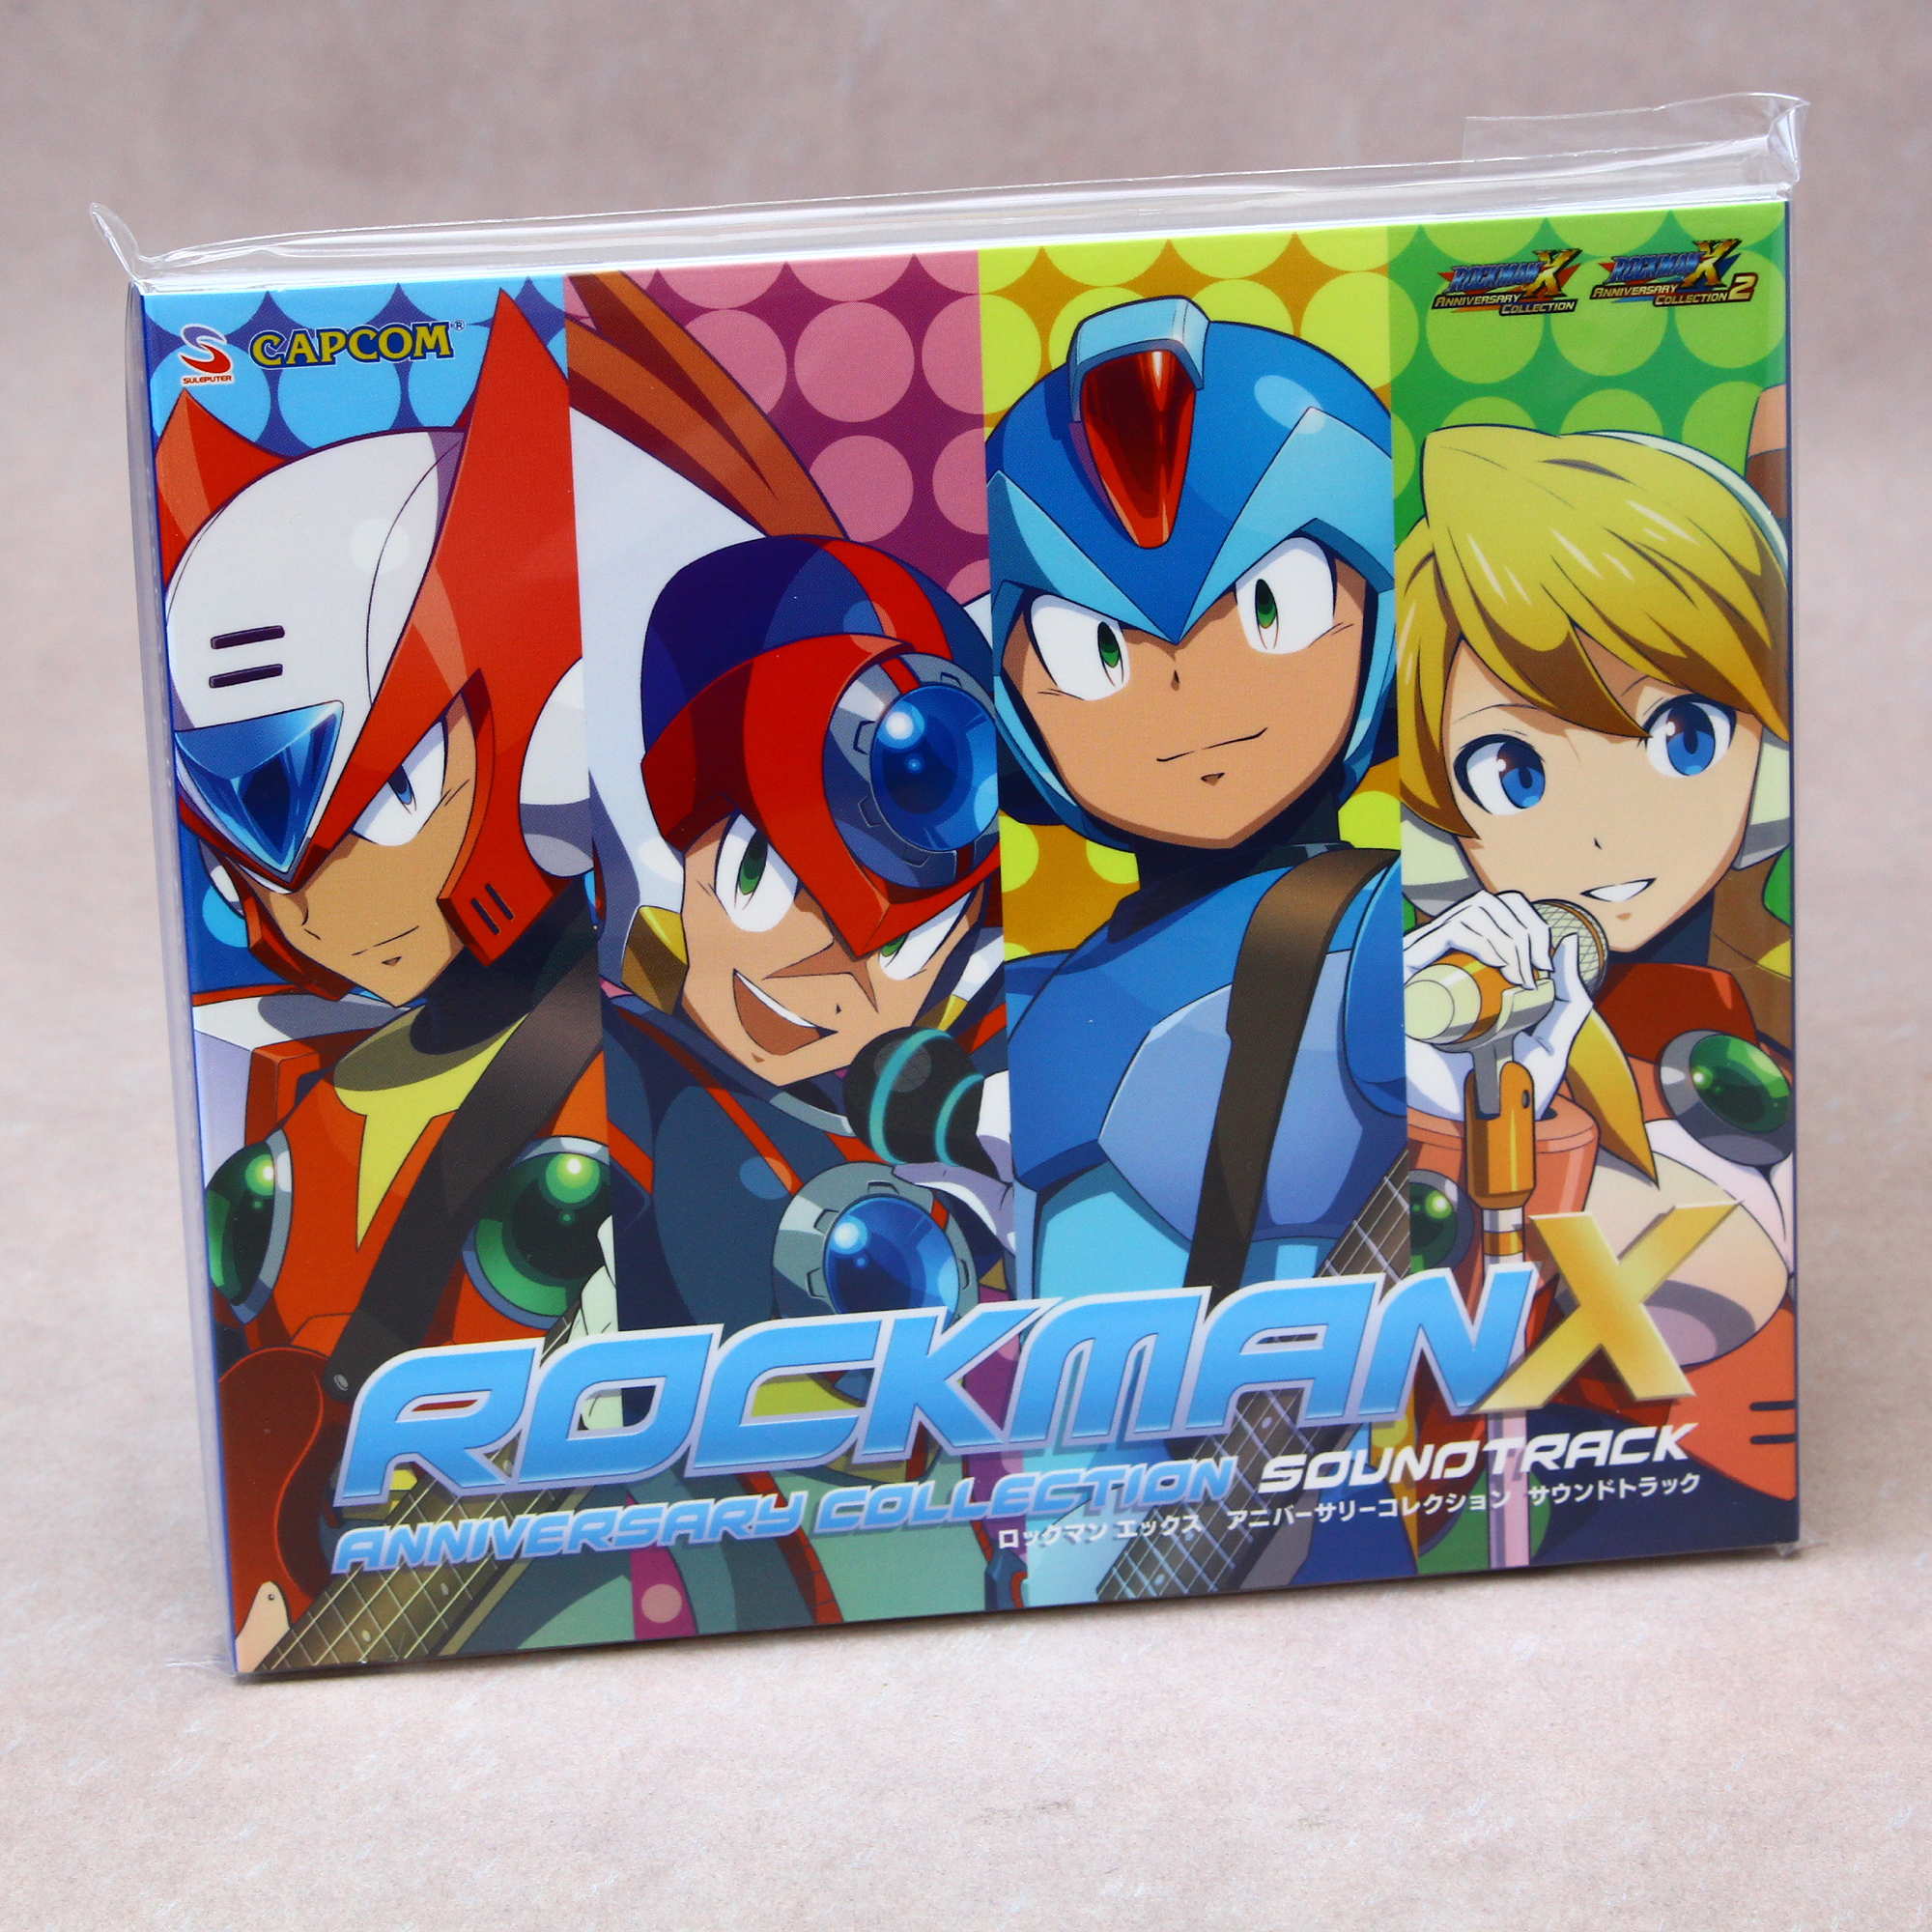 ROCKMAN X / Mega Man X Anniversary Collection Soundtrack